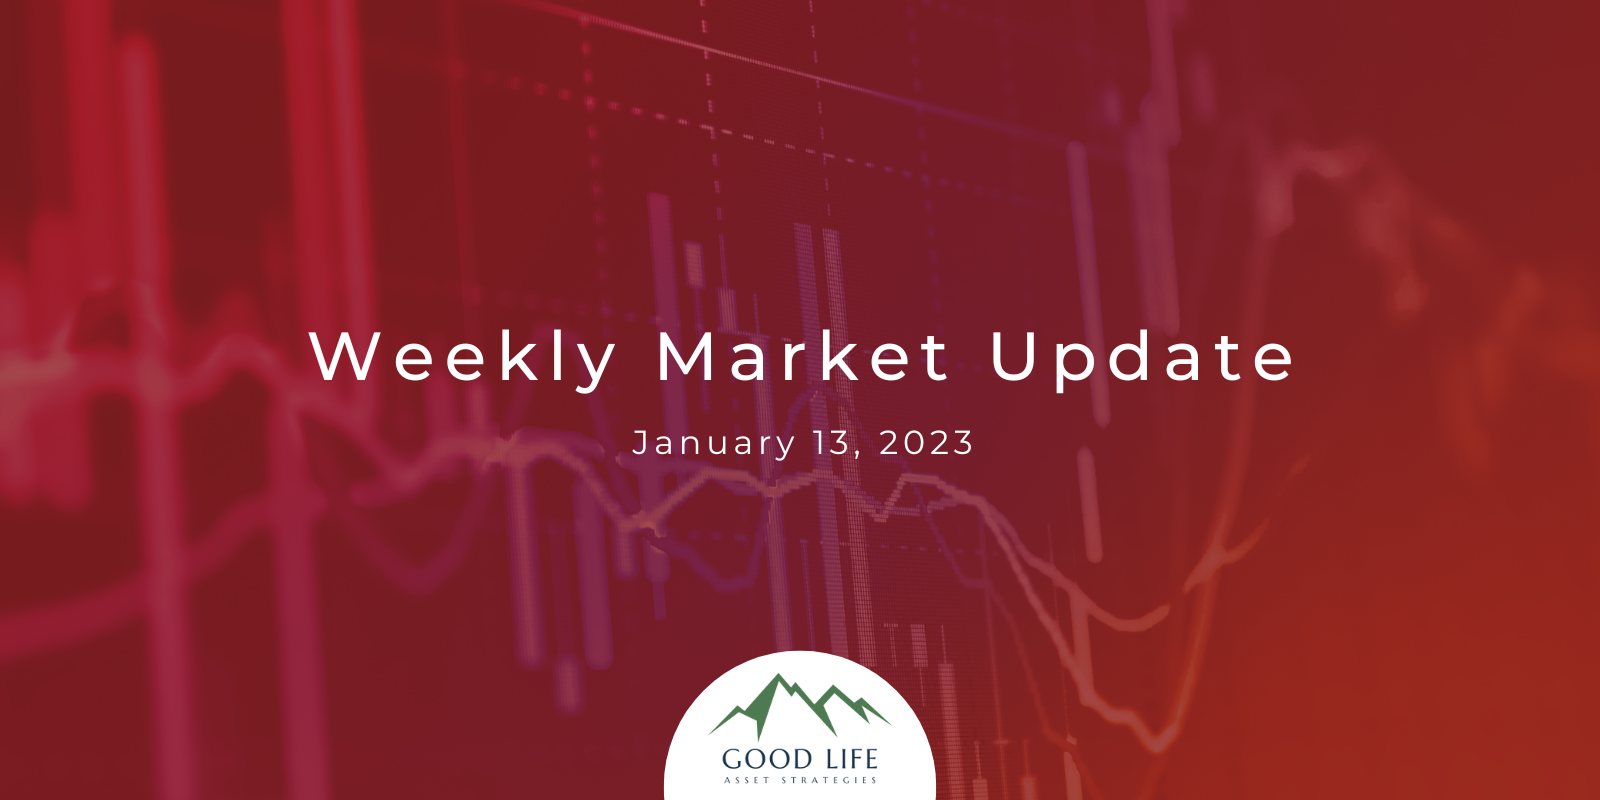 Bear market rally Weekly Market Update January 13, 2023